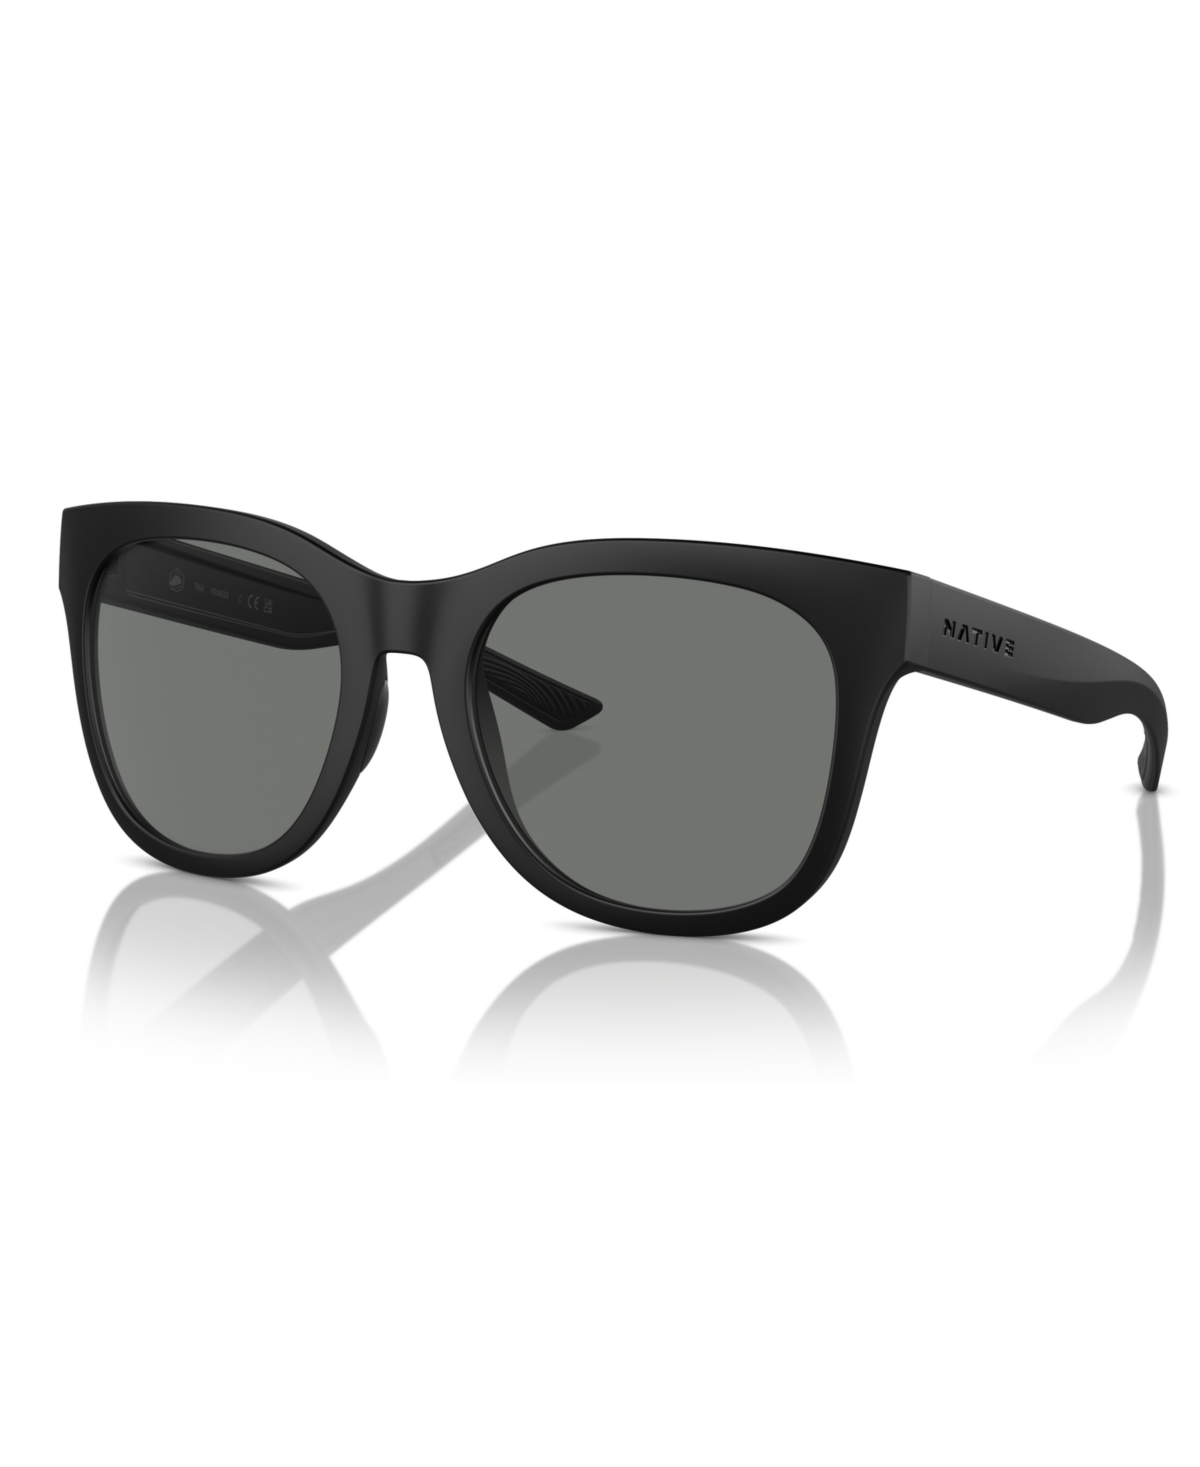 Women's Polarized Sunglasses, Tiaga Xd9044 - Matte Black, Bronze Reflex Polarized